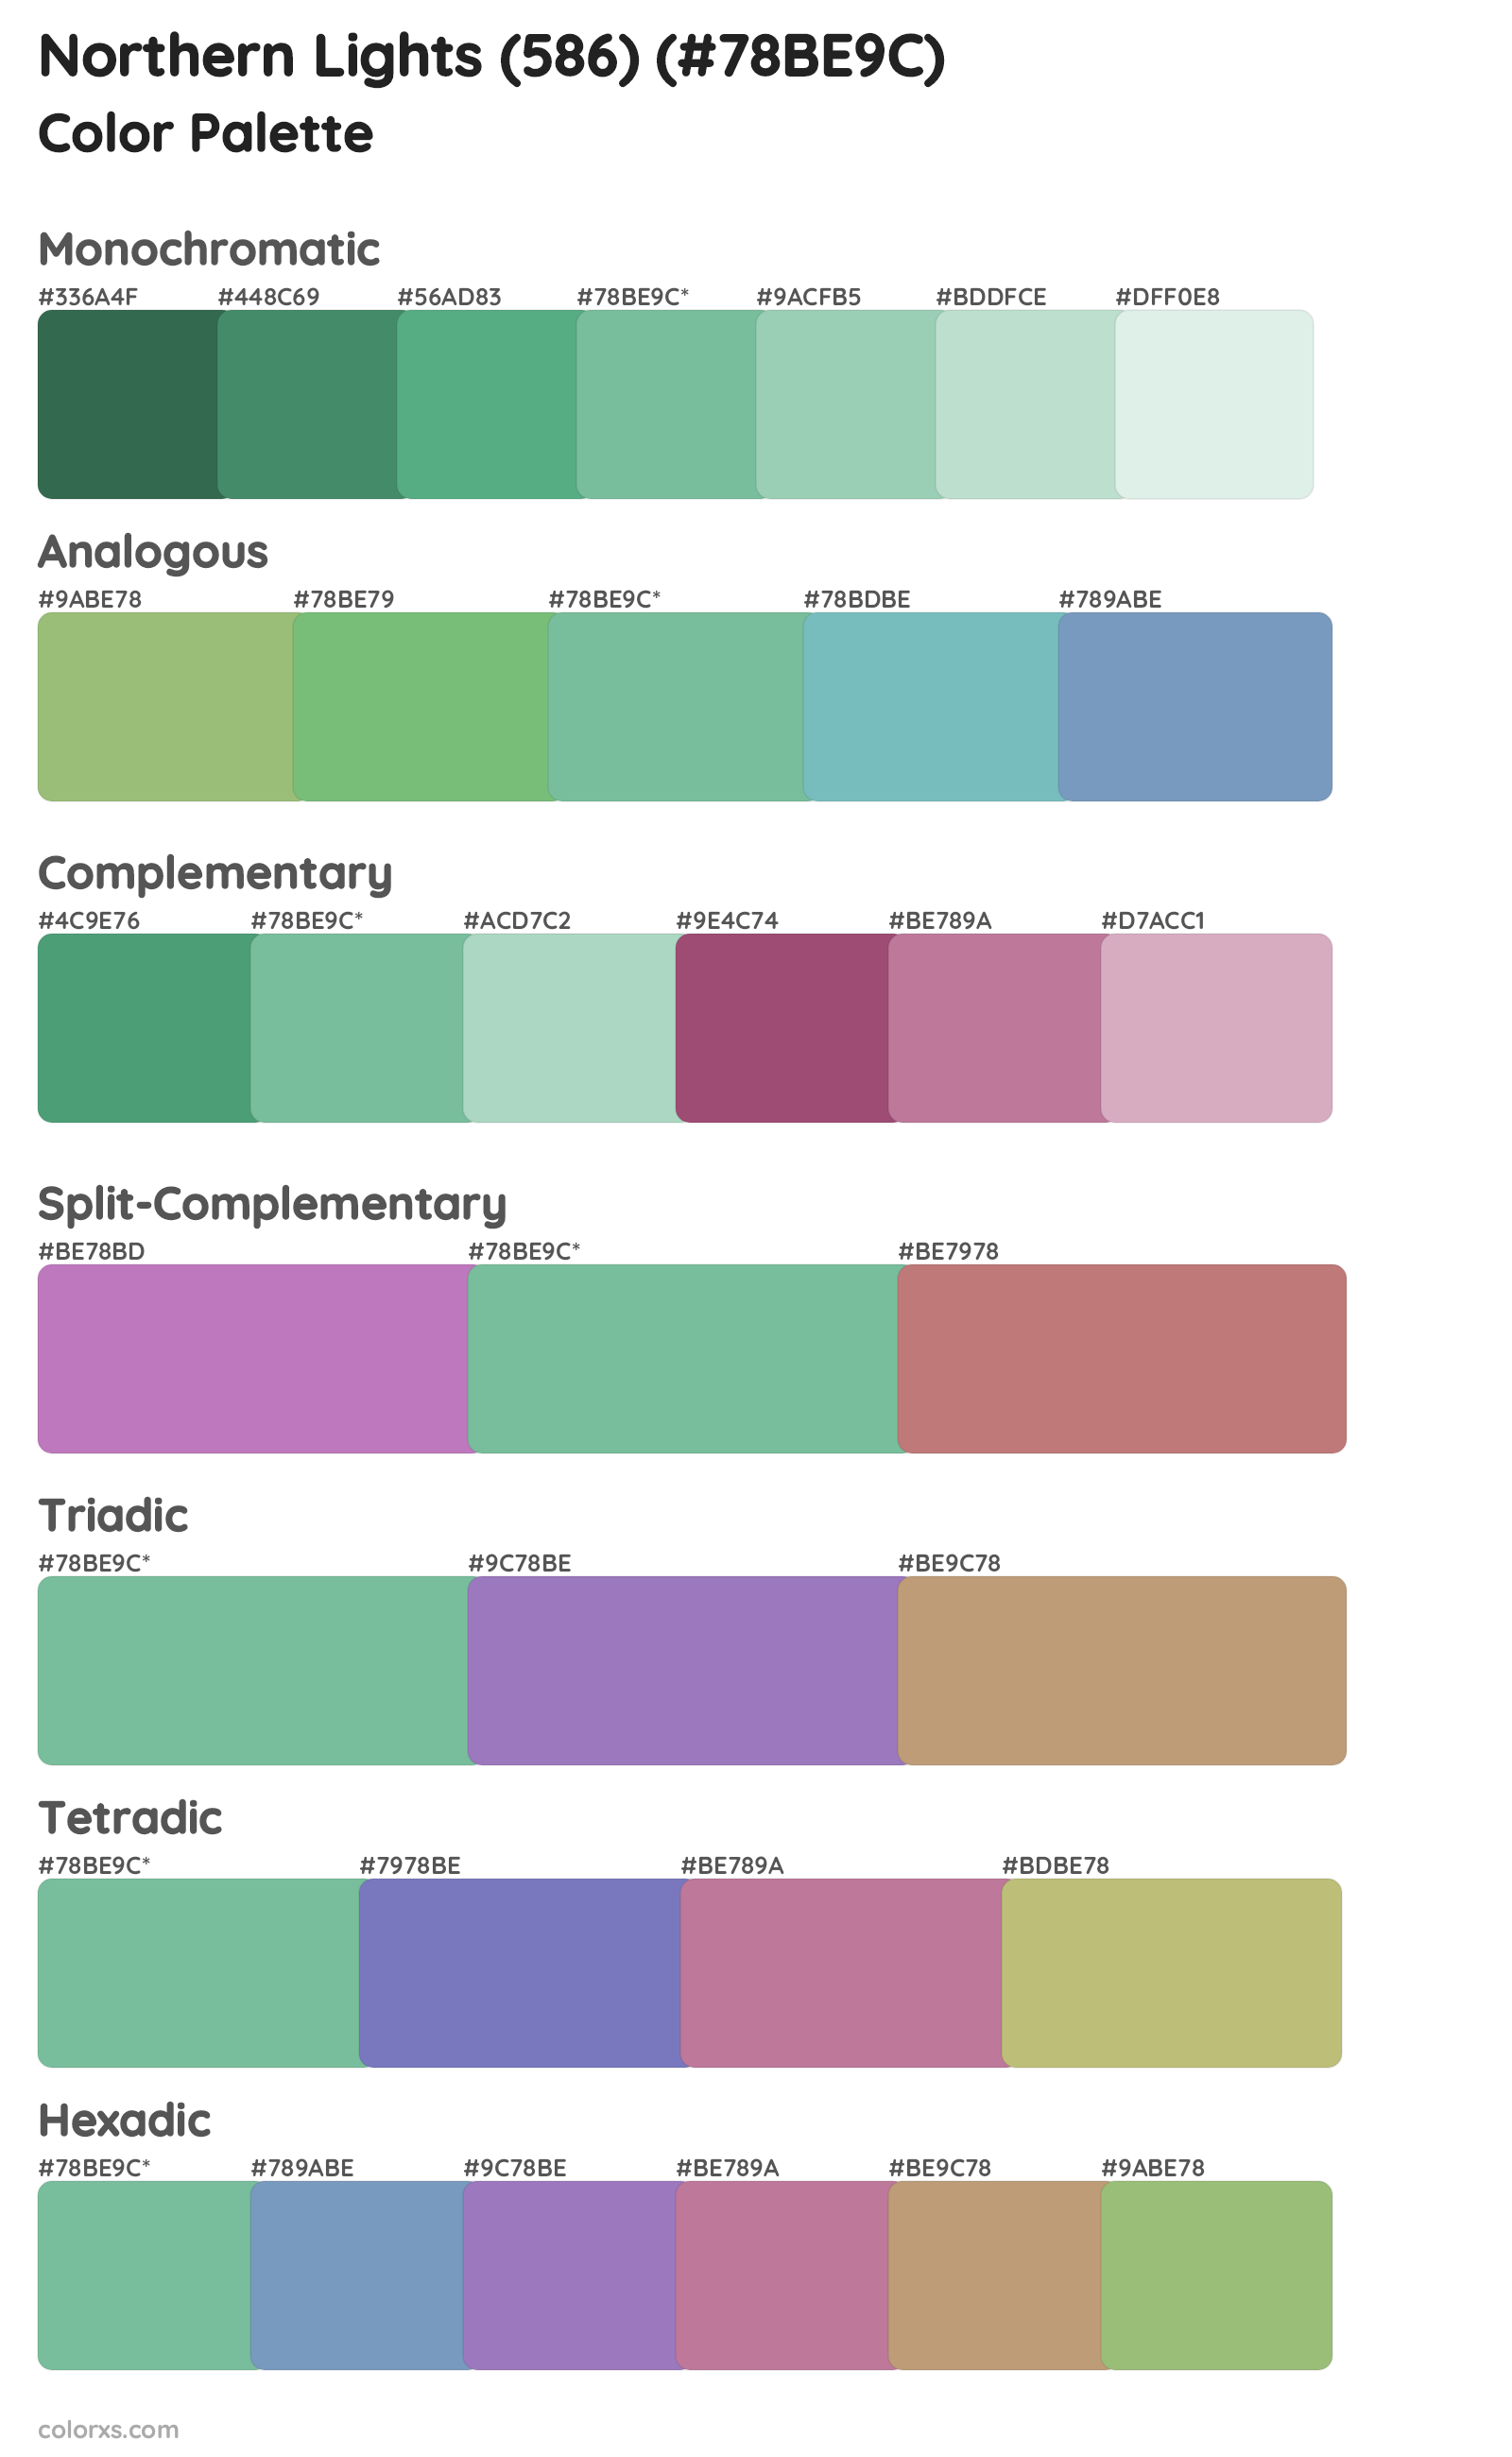 Northern Lights (586) Color Scheme Palettes